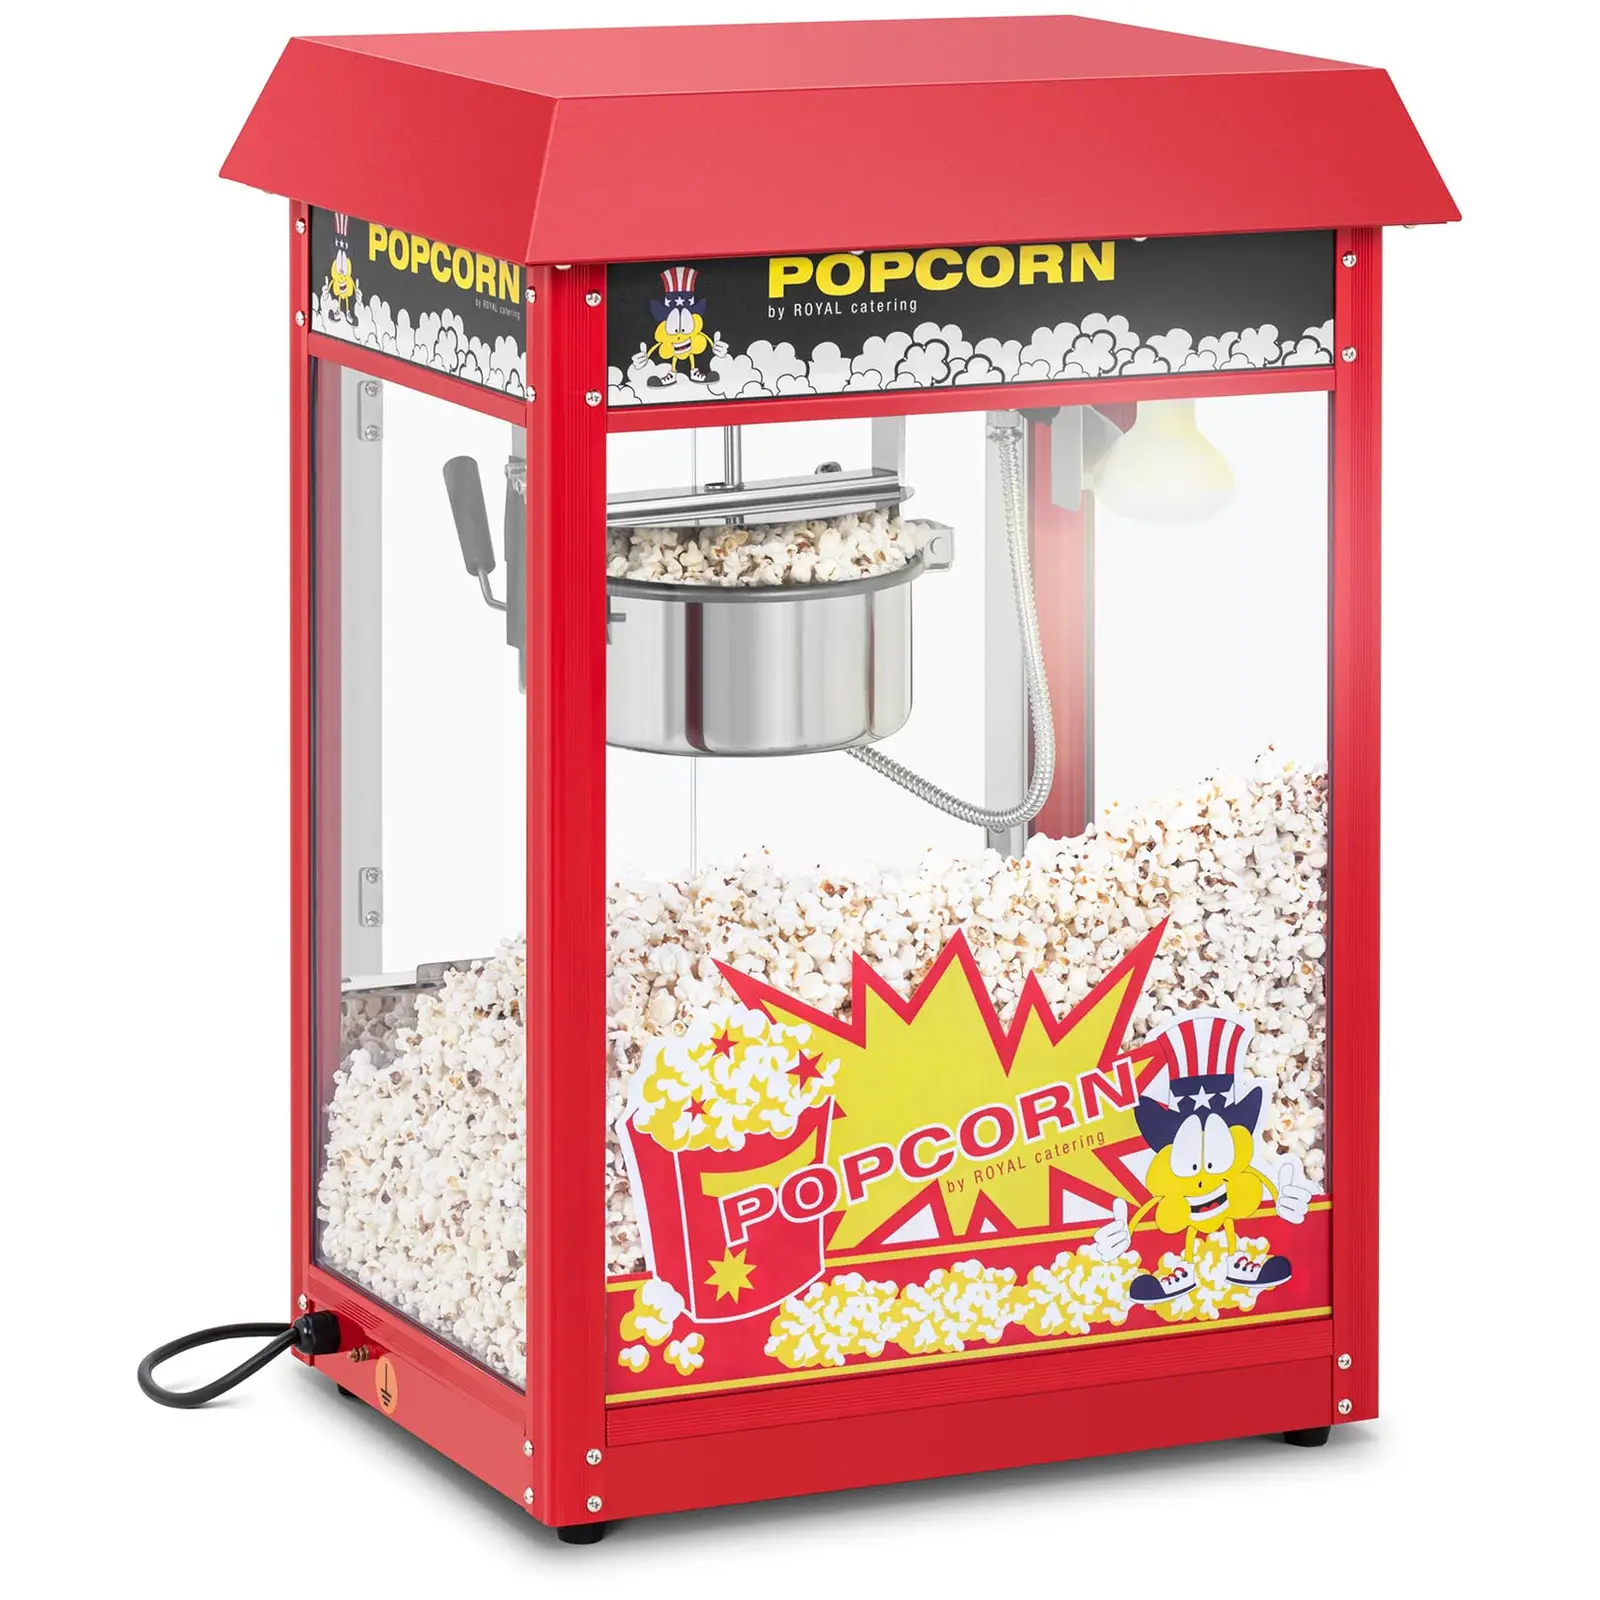 Popcornmaskiner | Bredt sortiment av ulike popcornmaskiner og tilbehør til lave priser